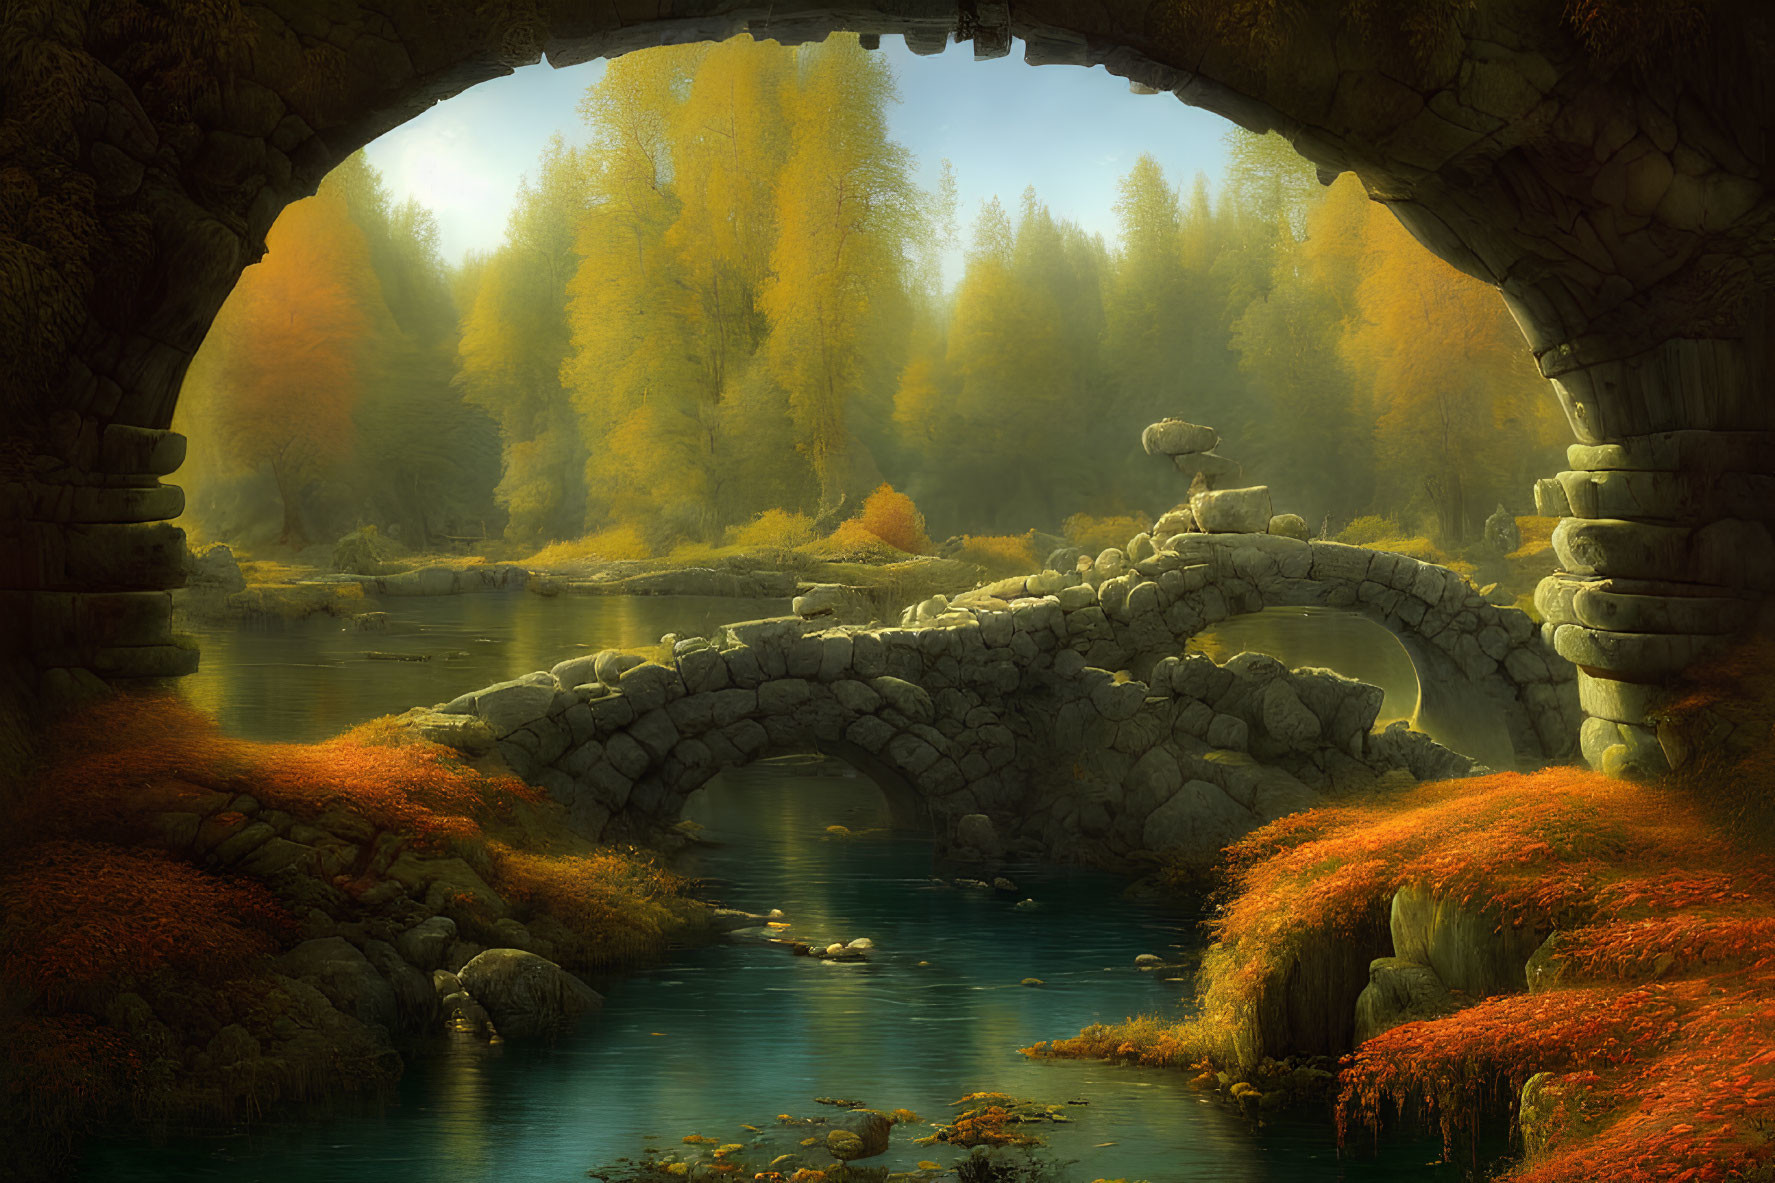 Ancient Stone Arch Bridge Over Serene River in Autumn Setting